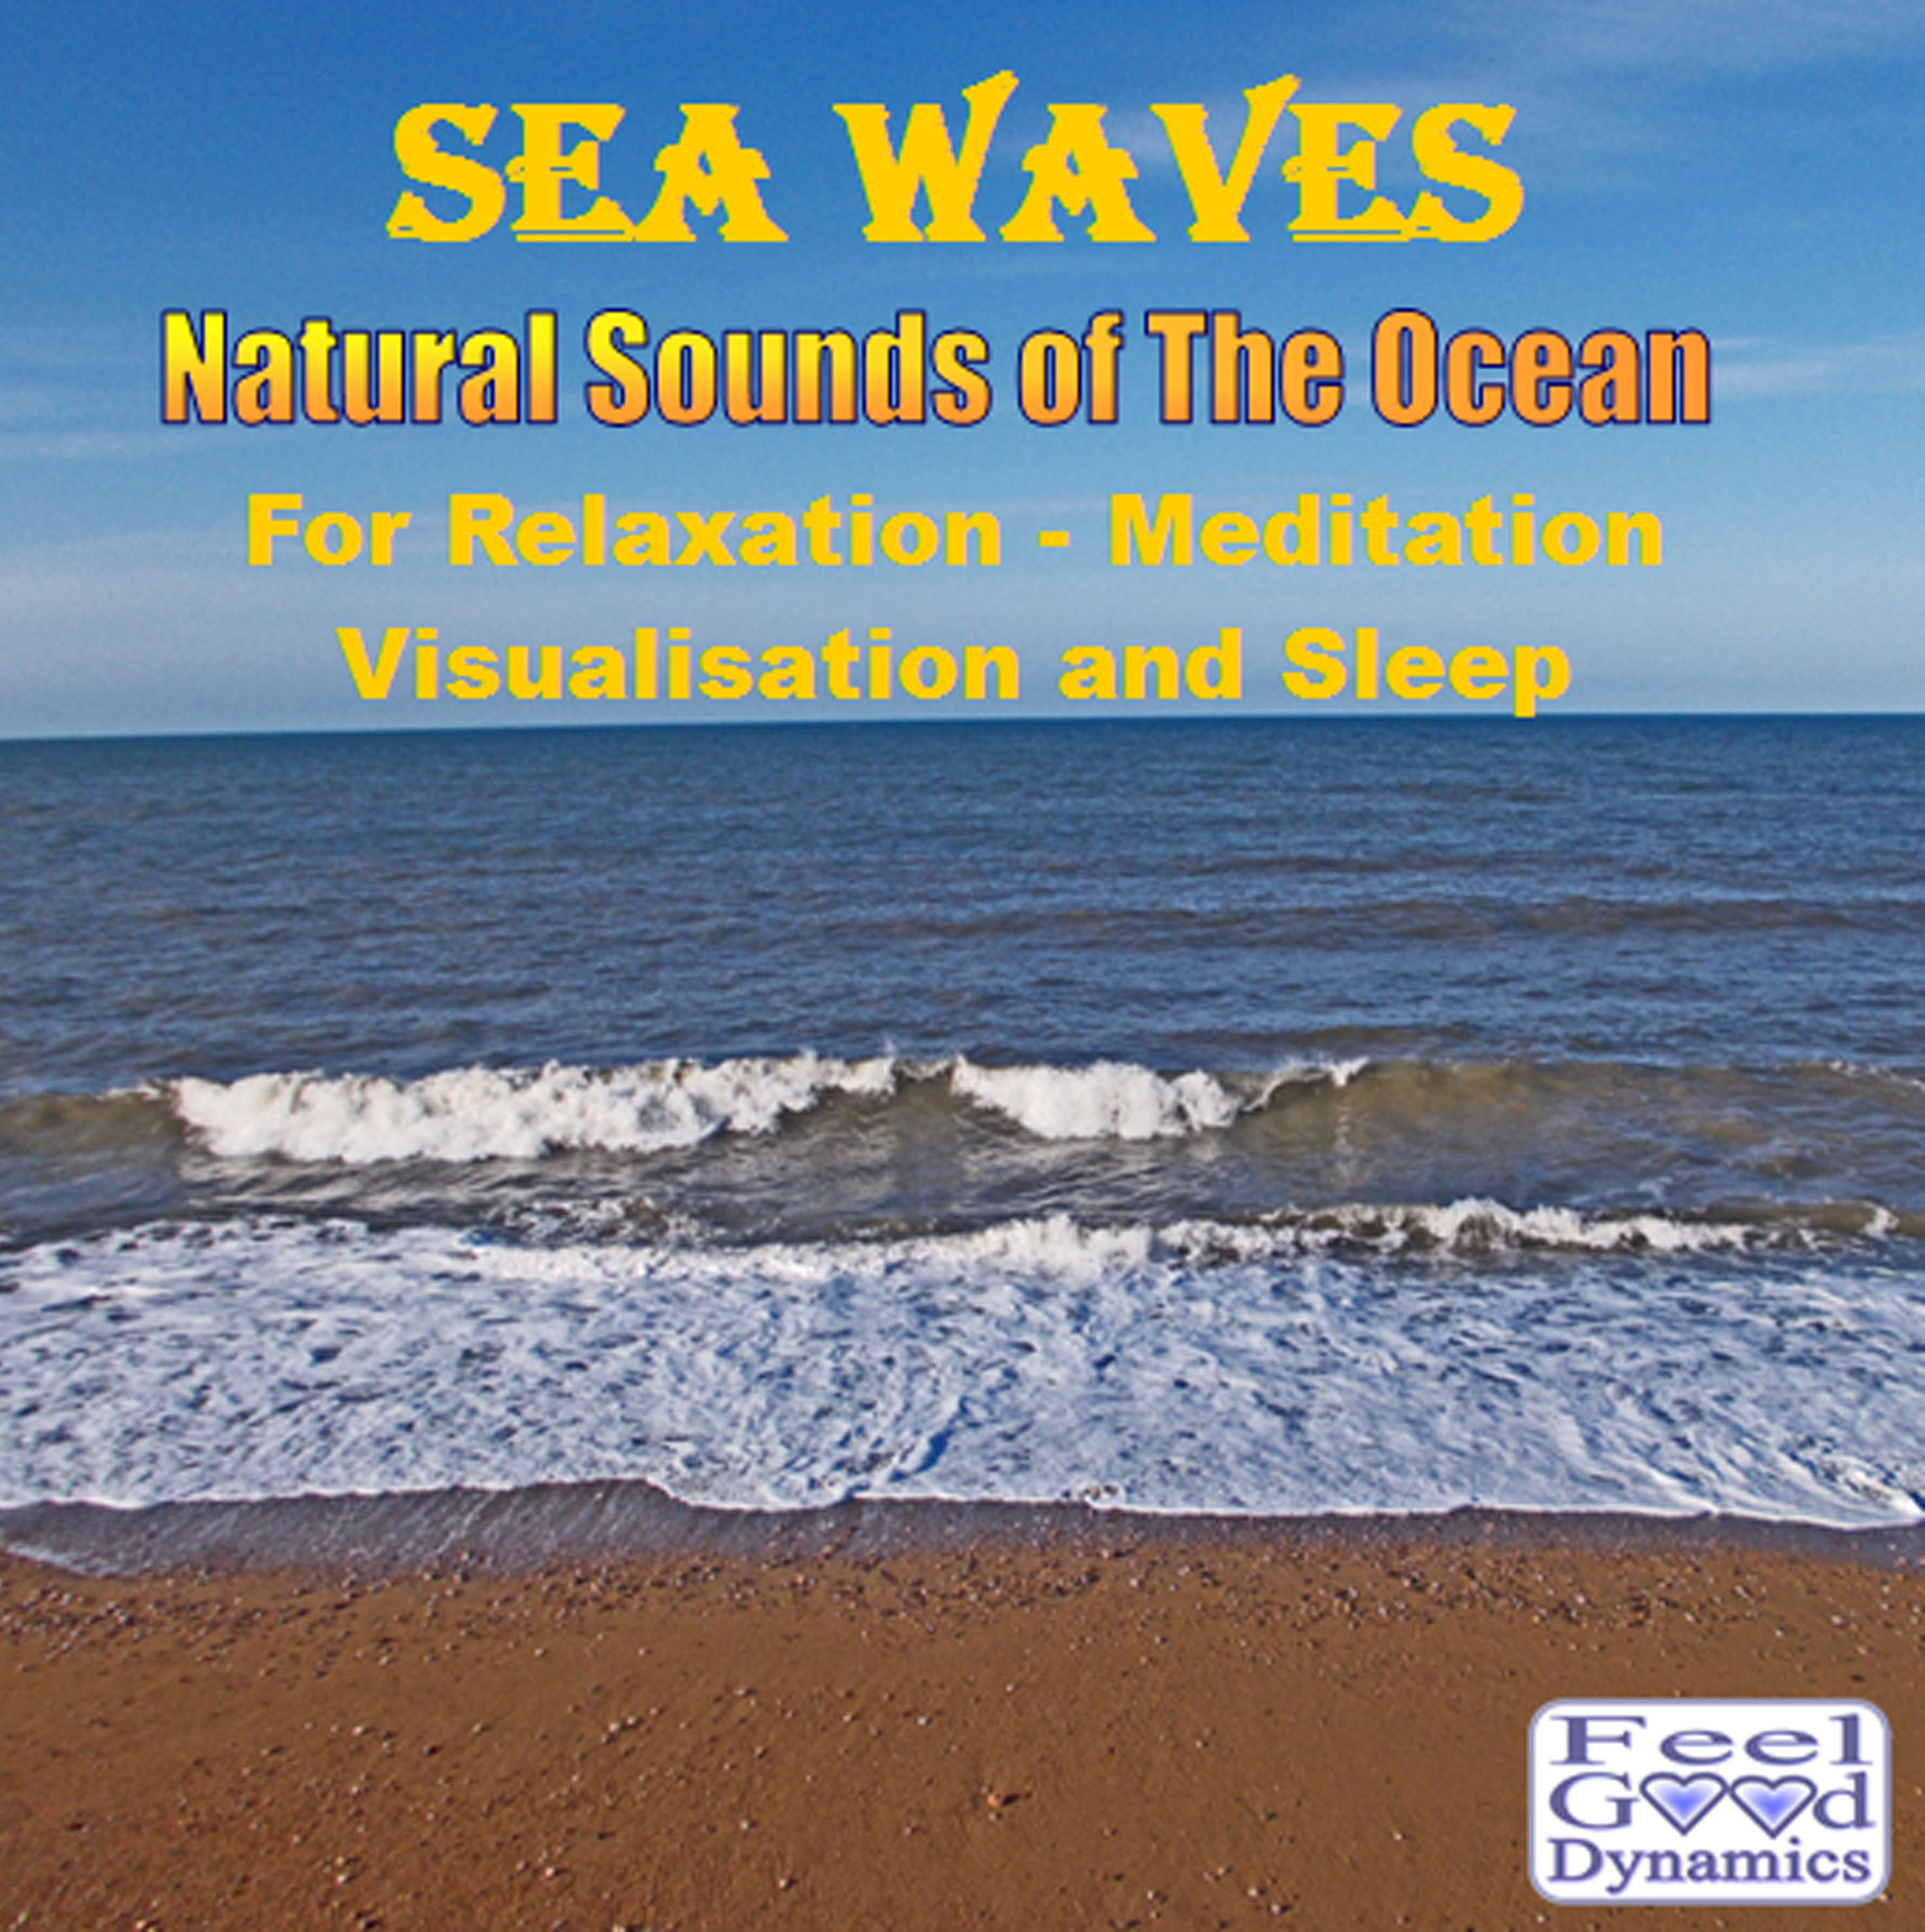 Sea Waves - Feel Good Dynamics